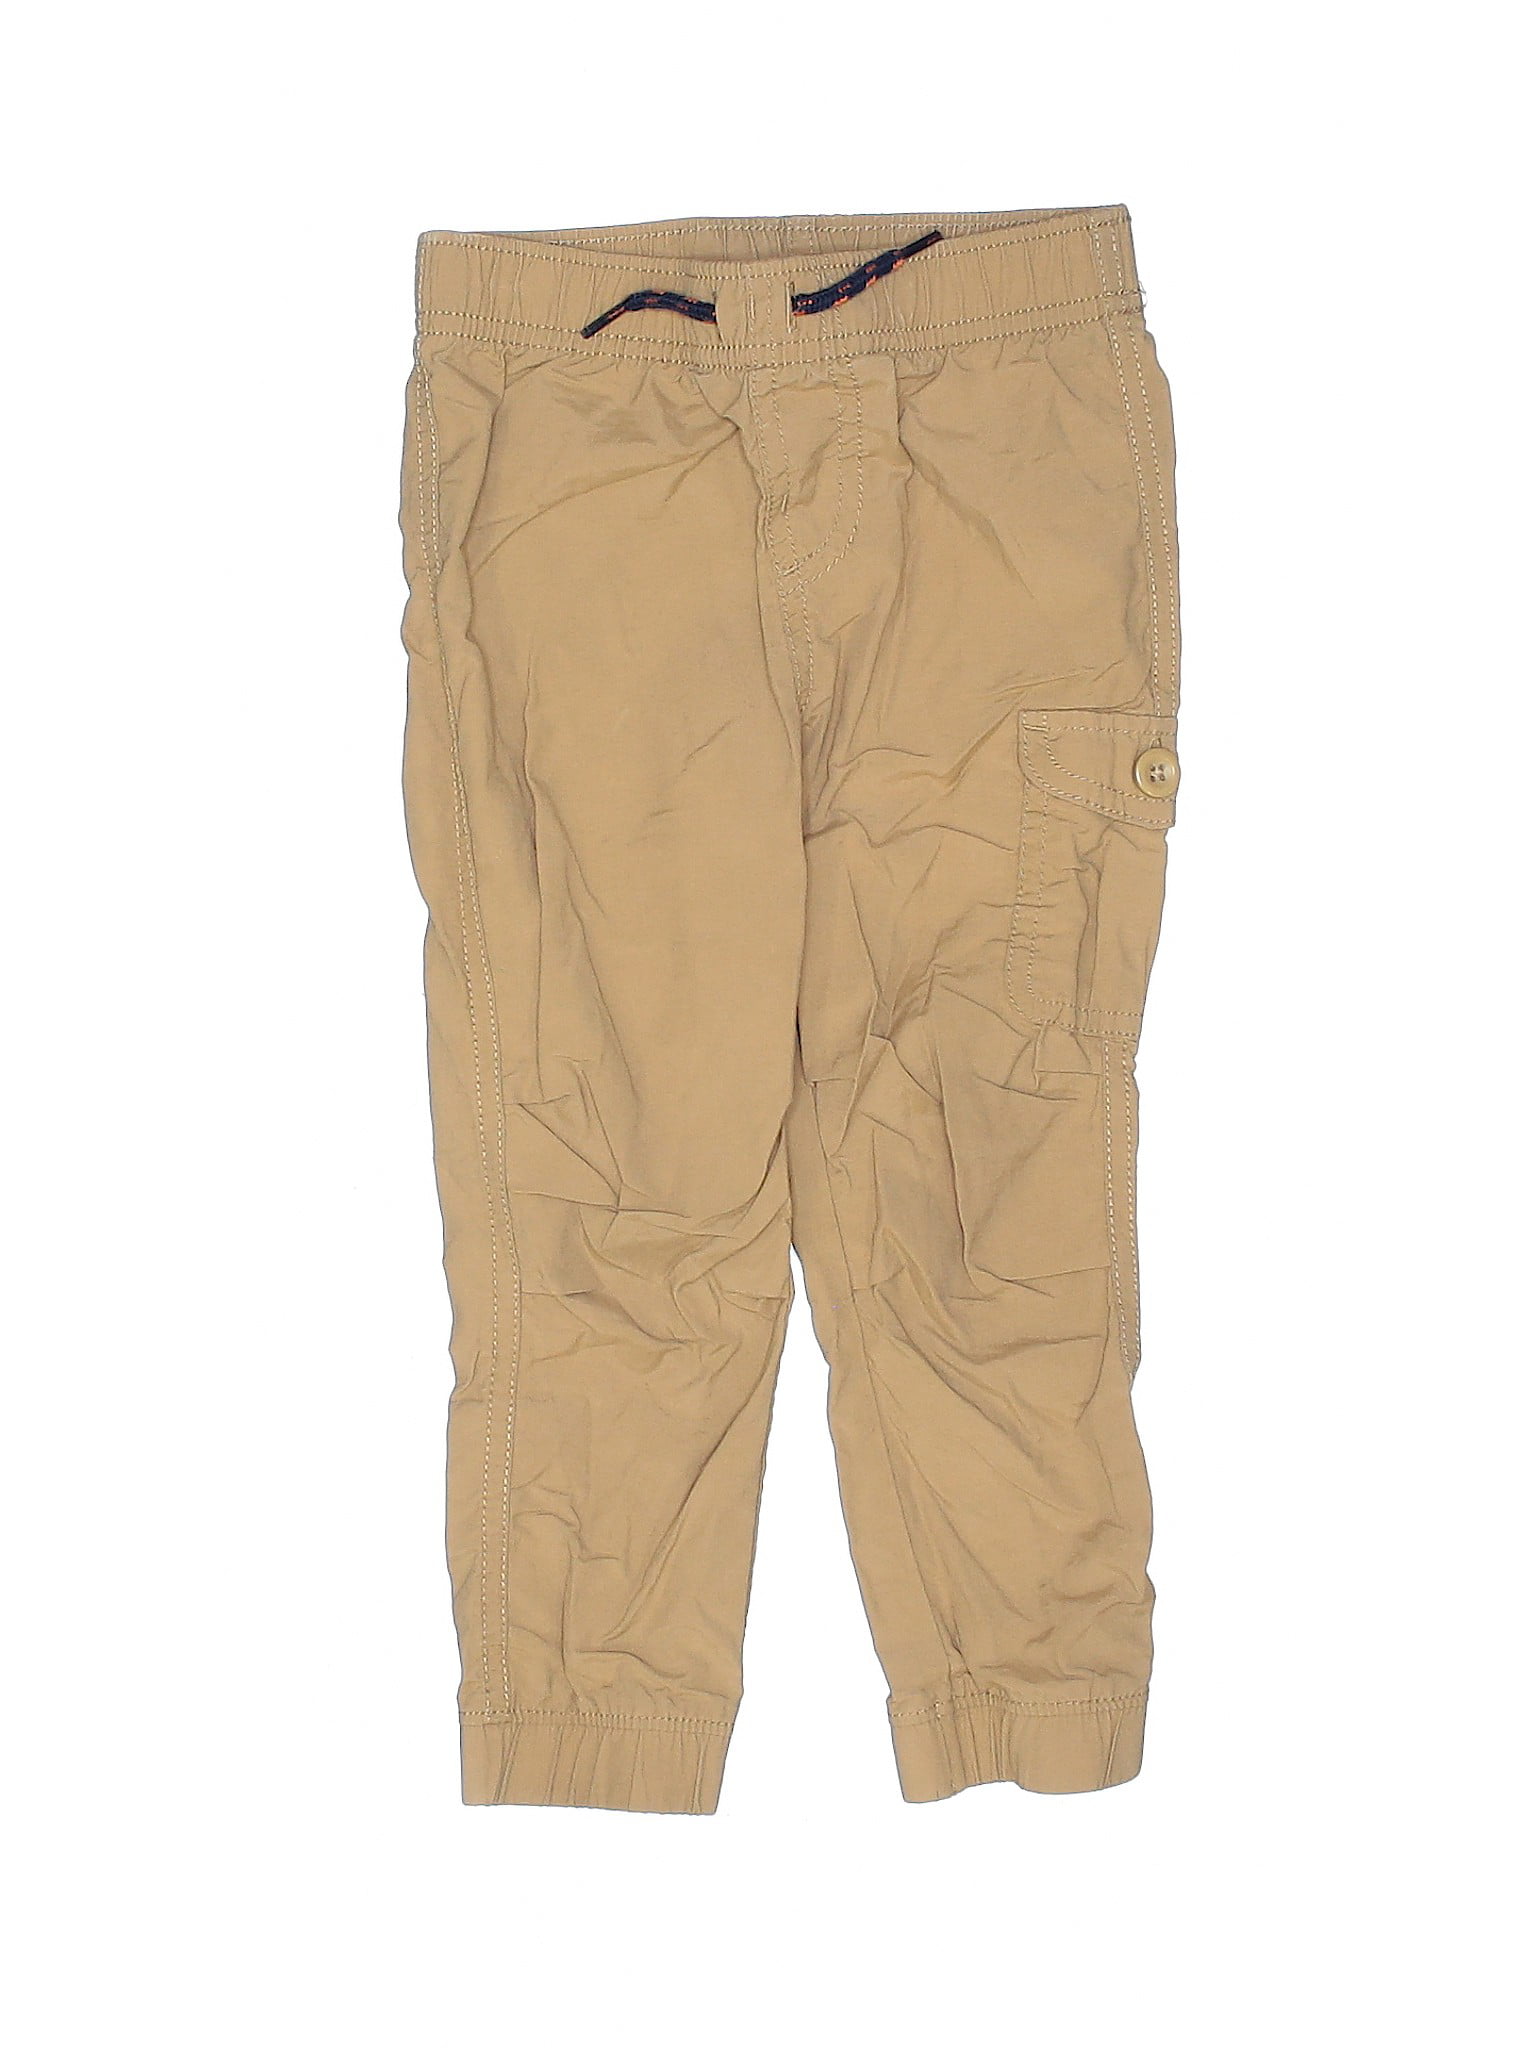 size 24 cargo pants